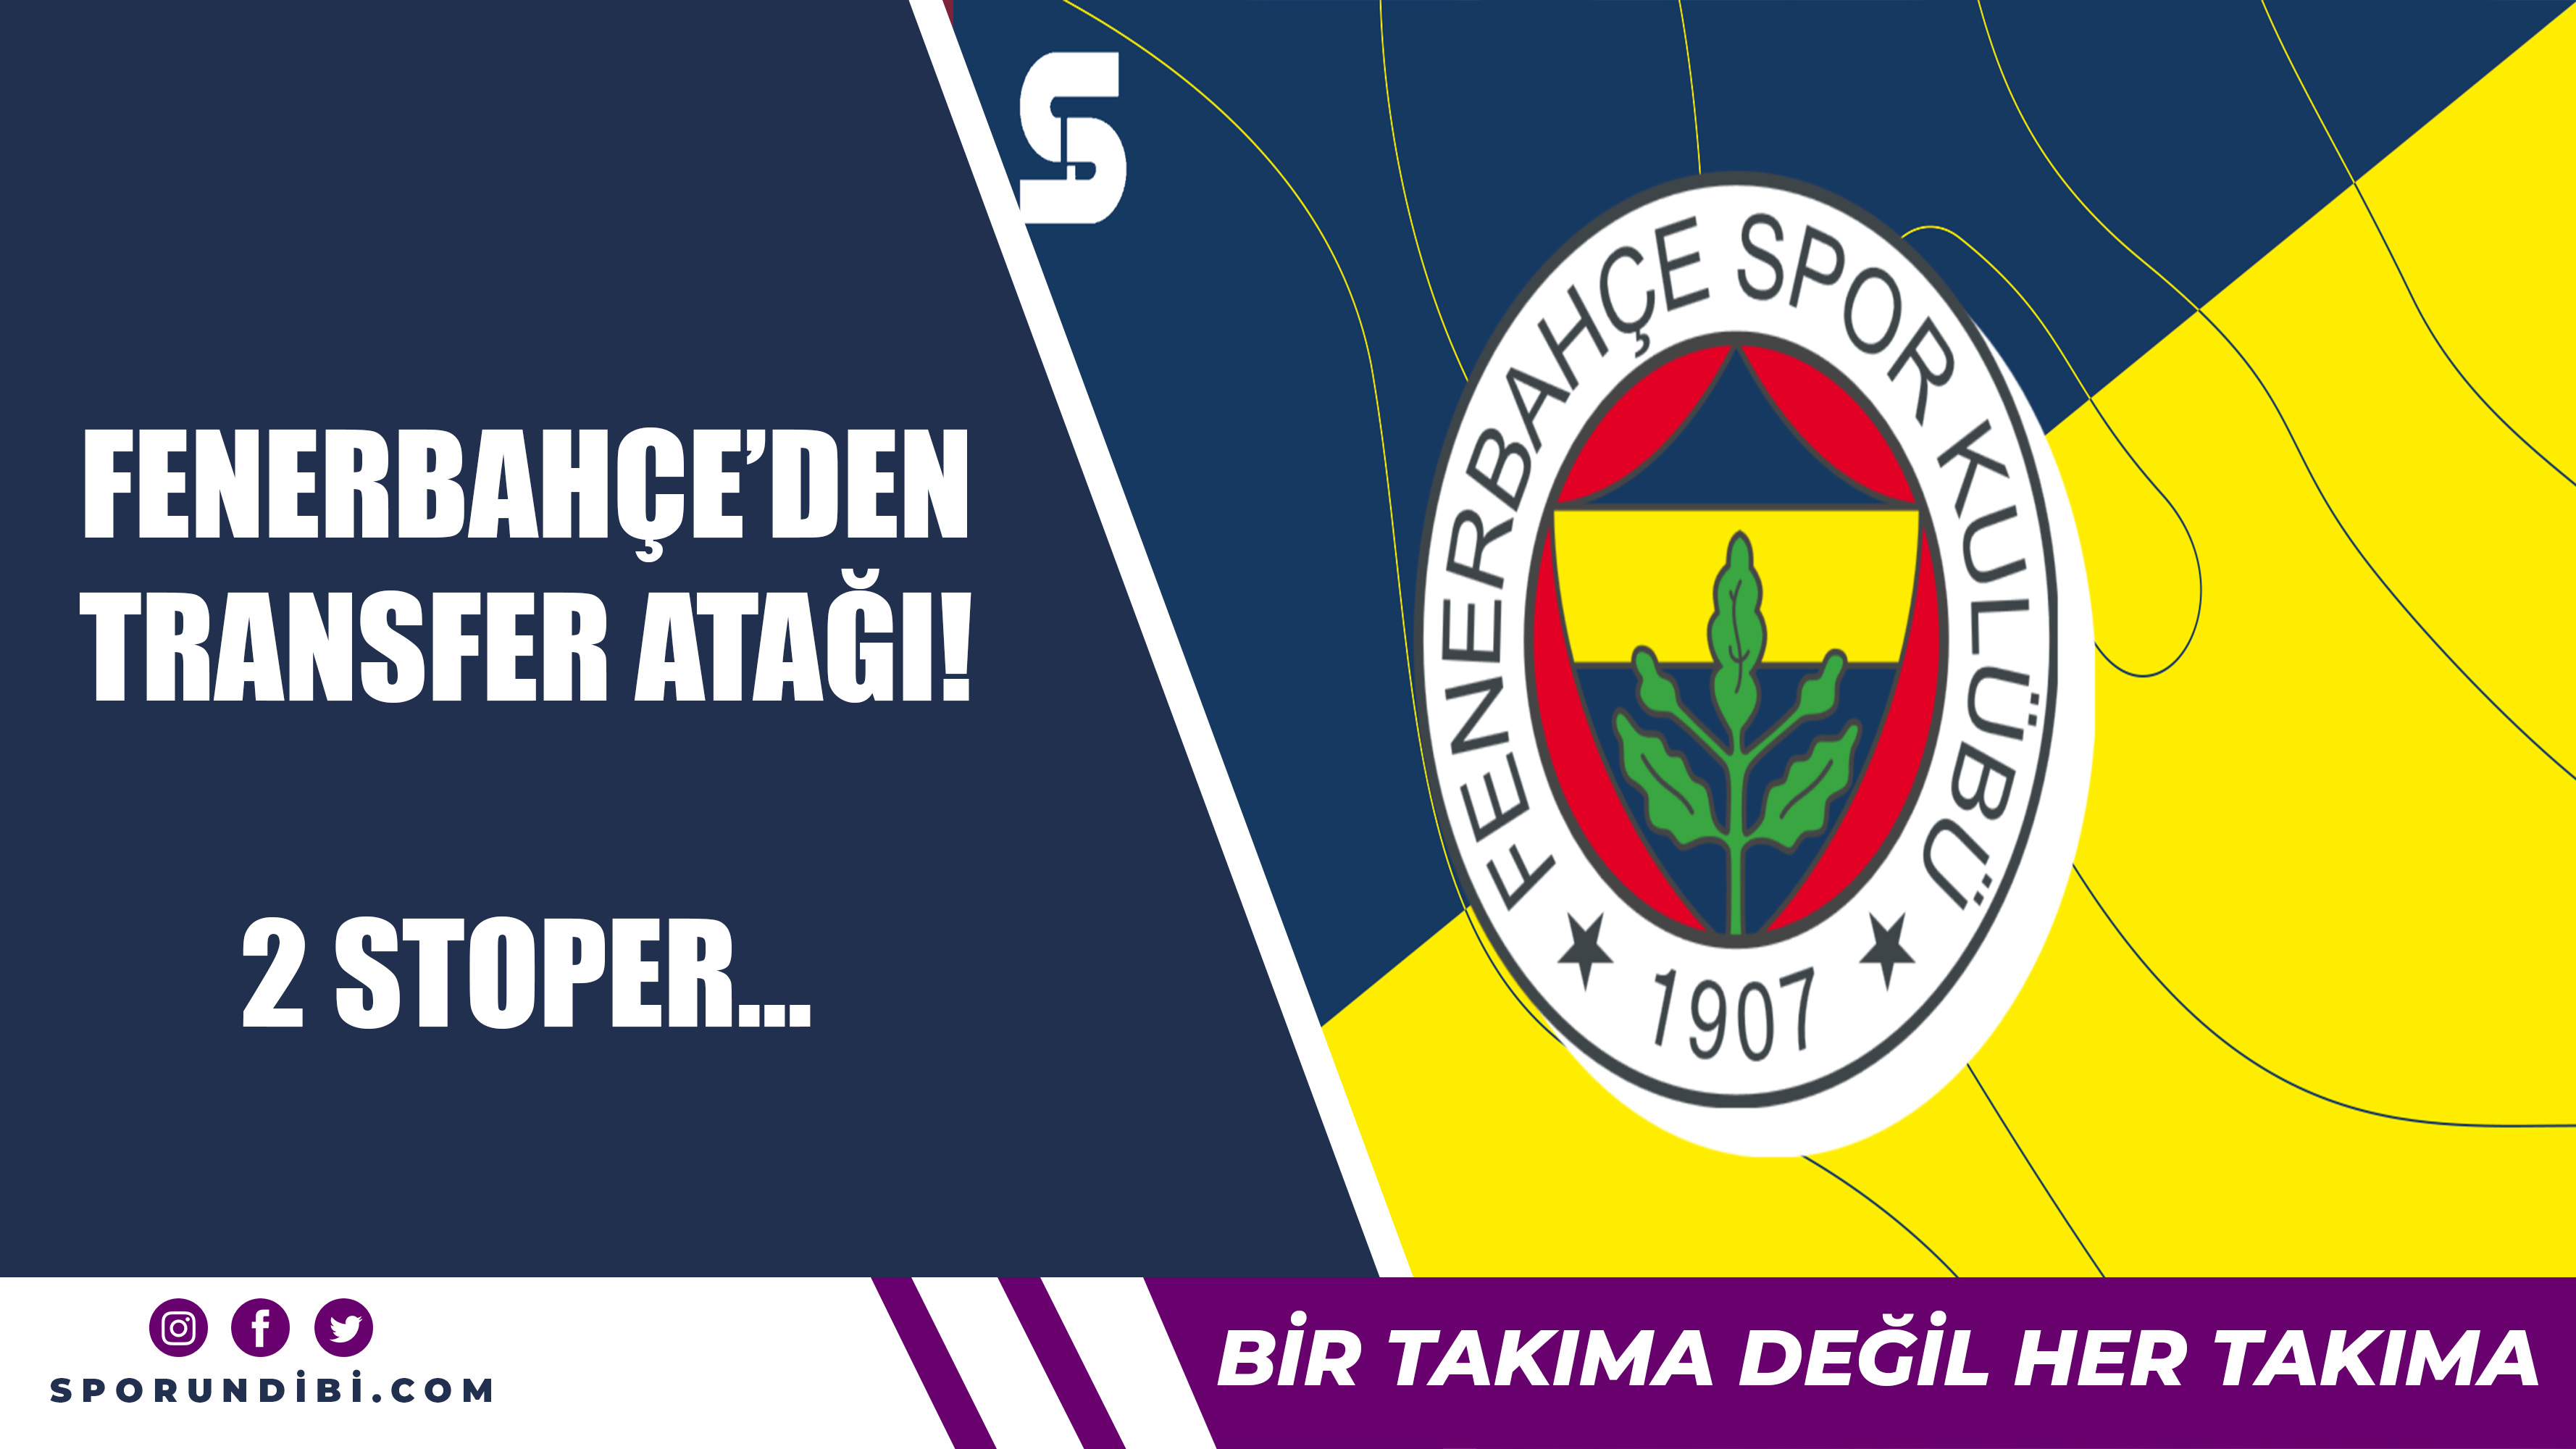 Fenerbahçe'den transfer atağı! 2 stoper...